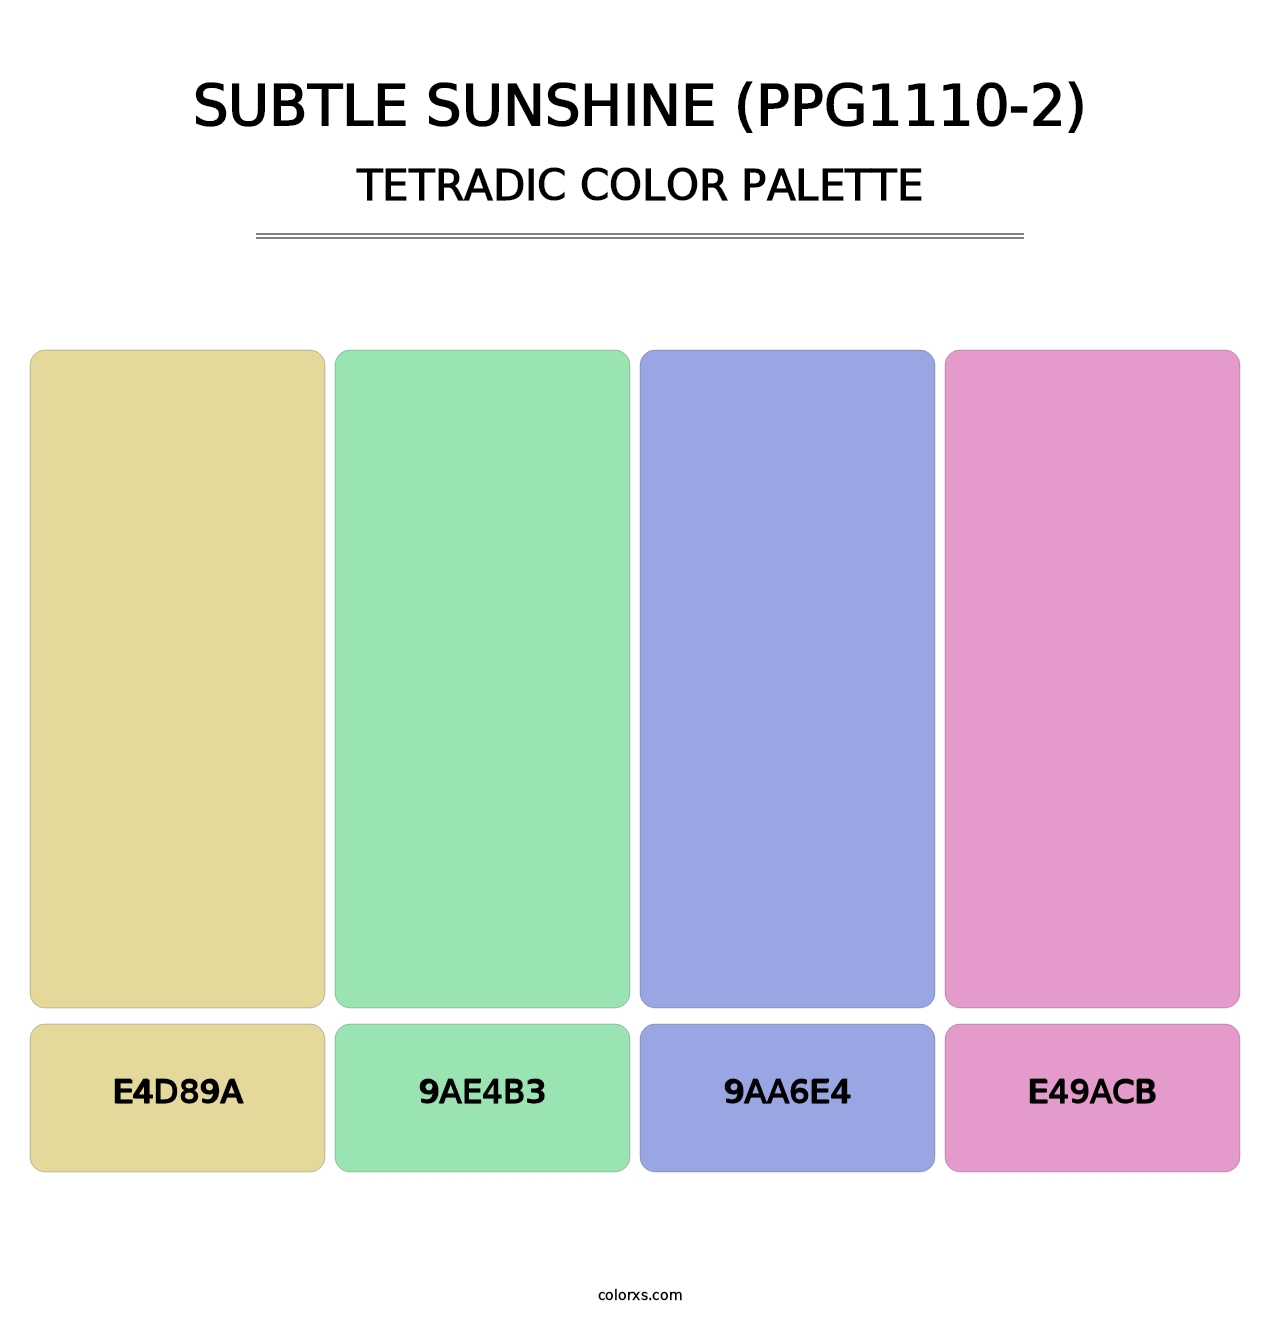 Subtle Sunshine (PPG1110-2) - Tetradic Color Palette